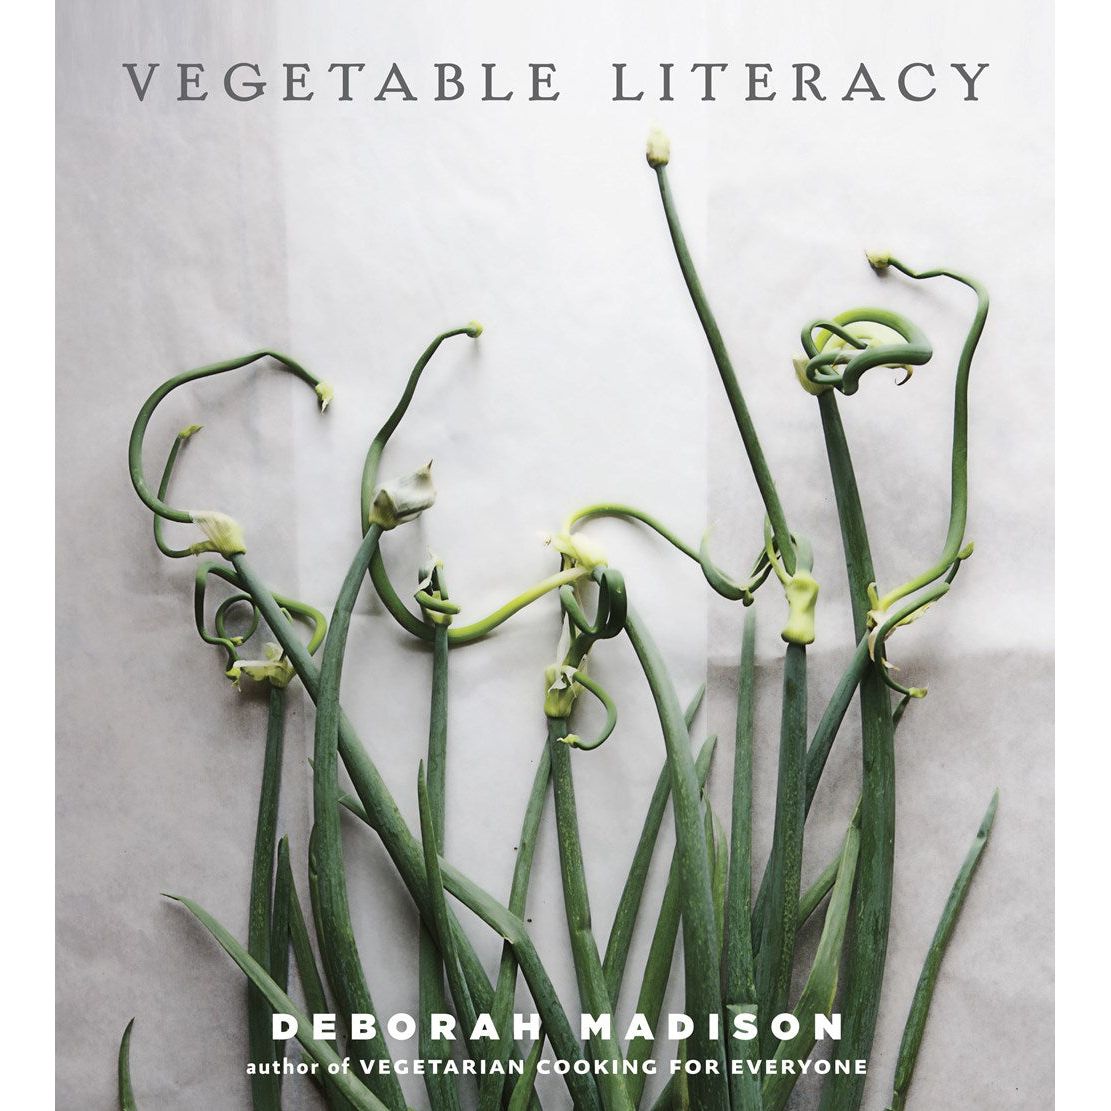 Vegetable Literacy (Deborah Madison)